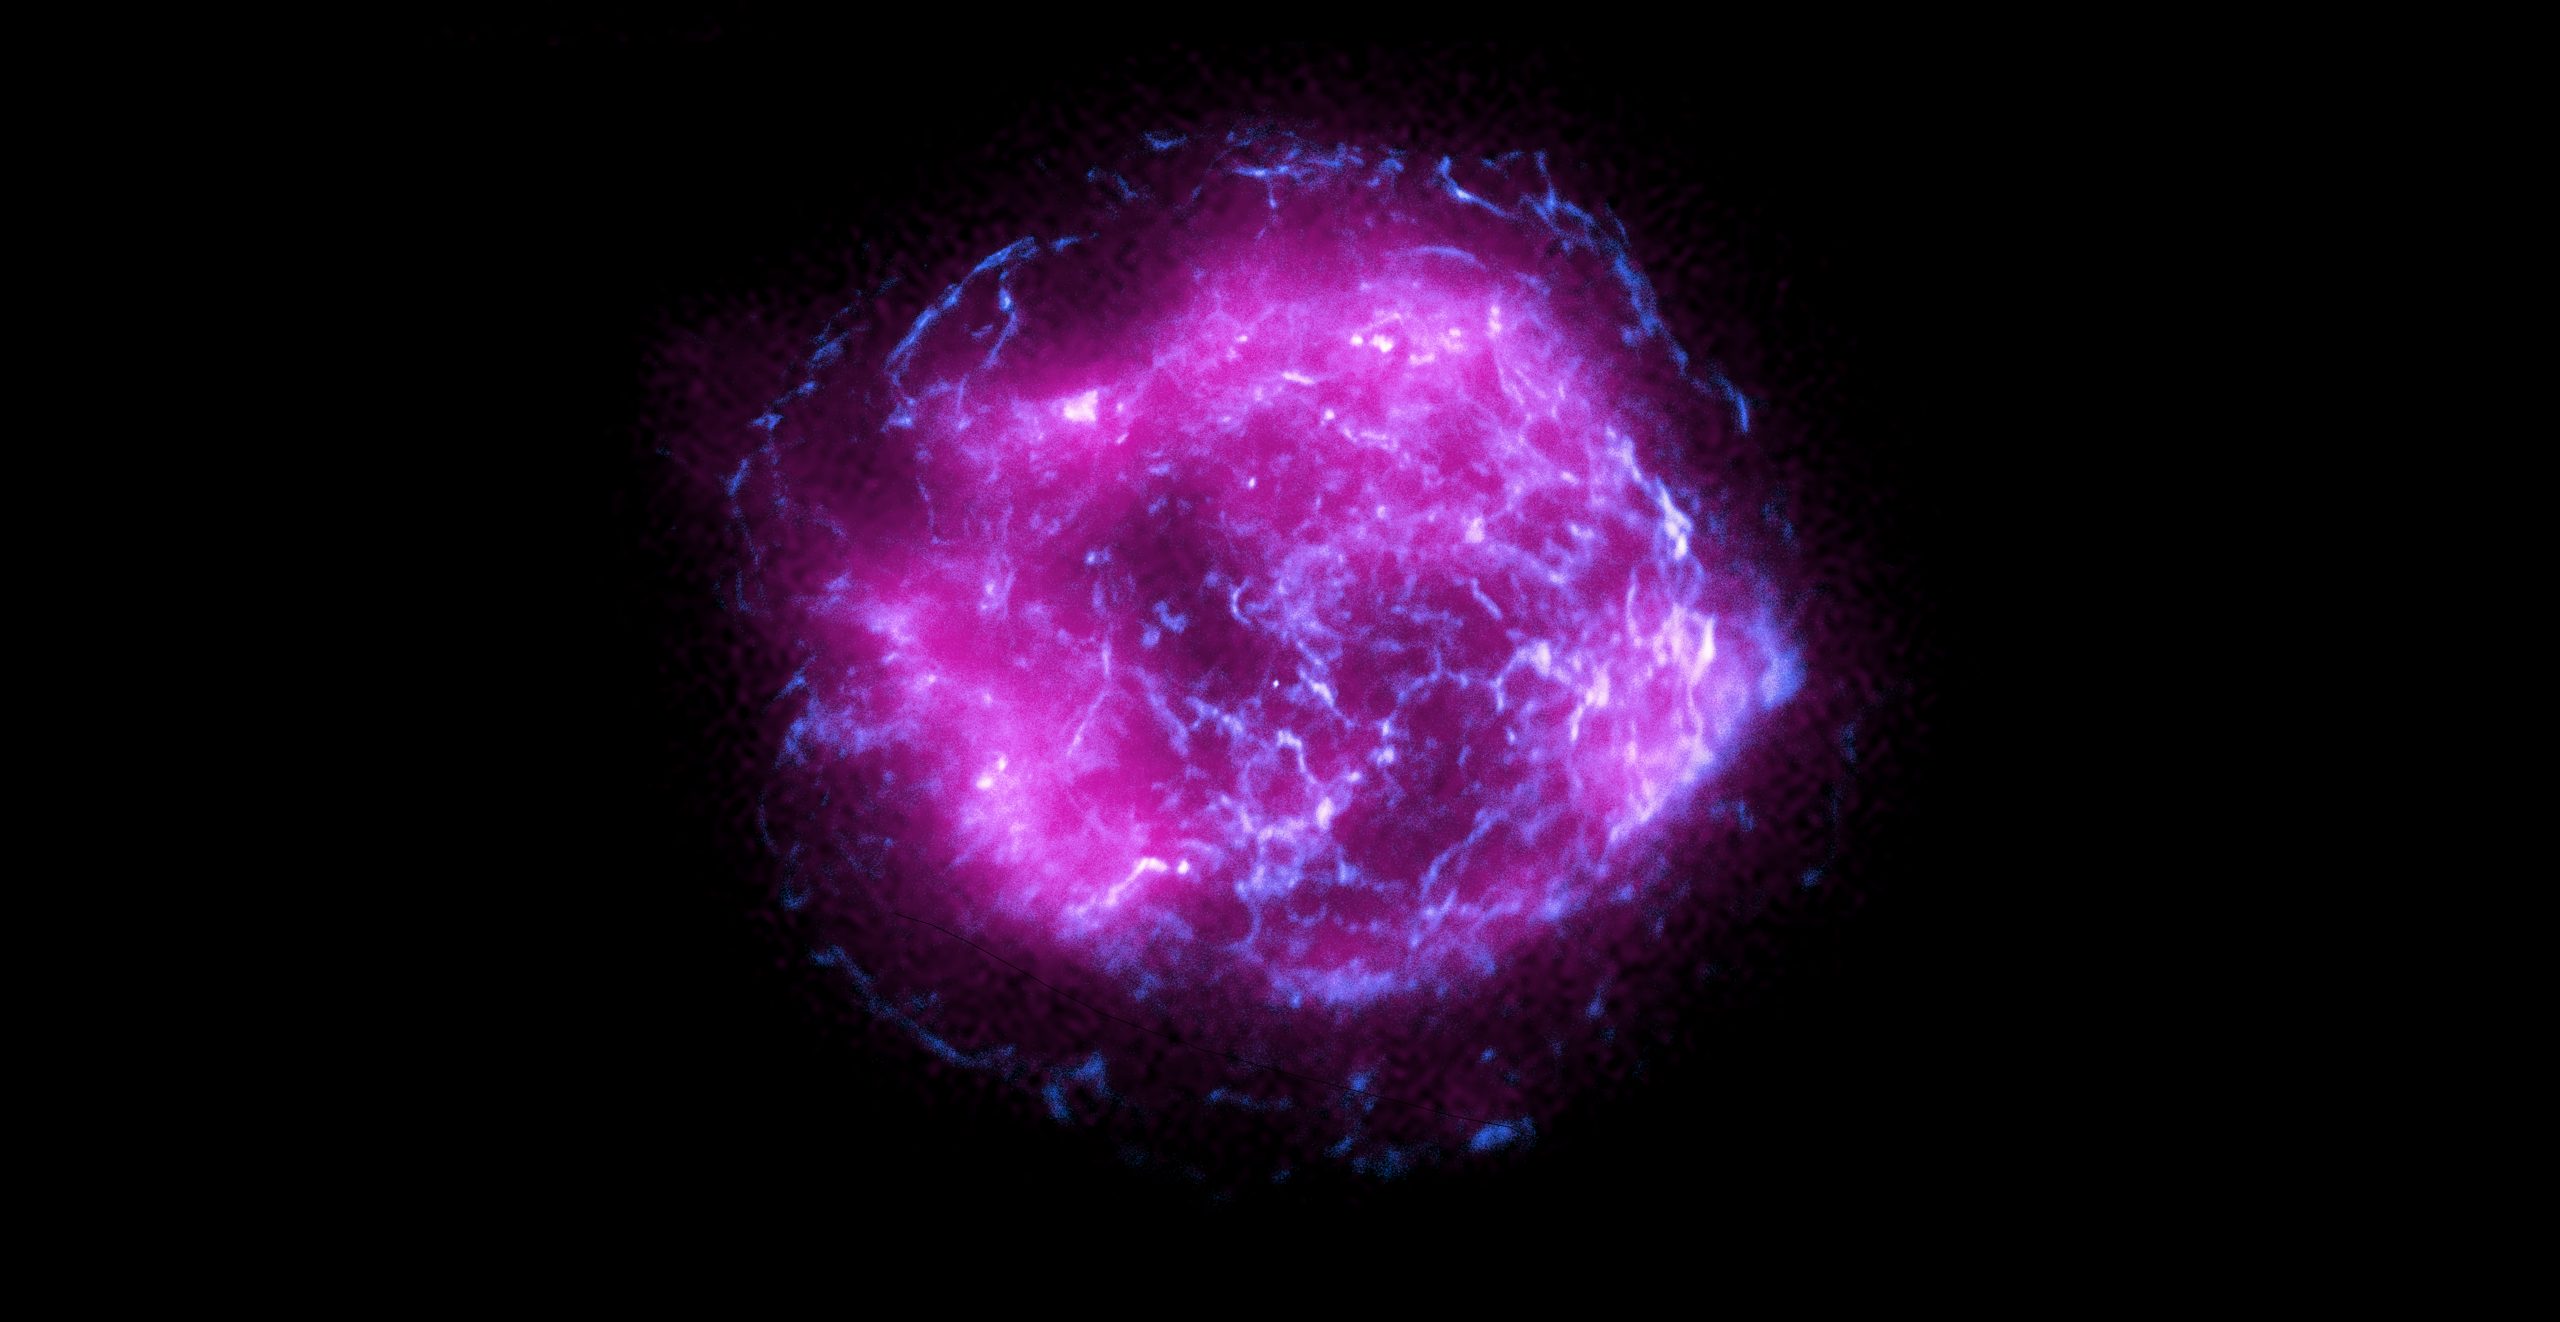 X-ray image of Cassiopeia A from the IXPE (magenta) and Chandra (blue) telescopes. Credit: NASA/CXC/SAO/IXPE